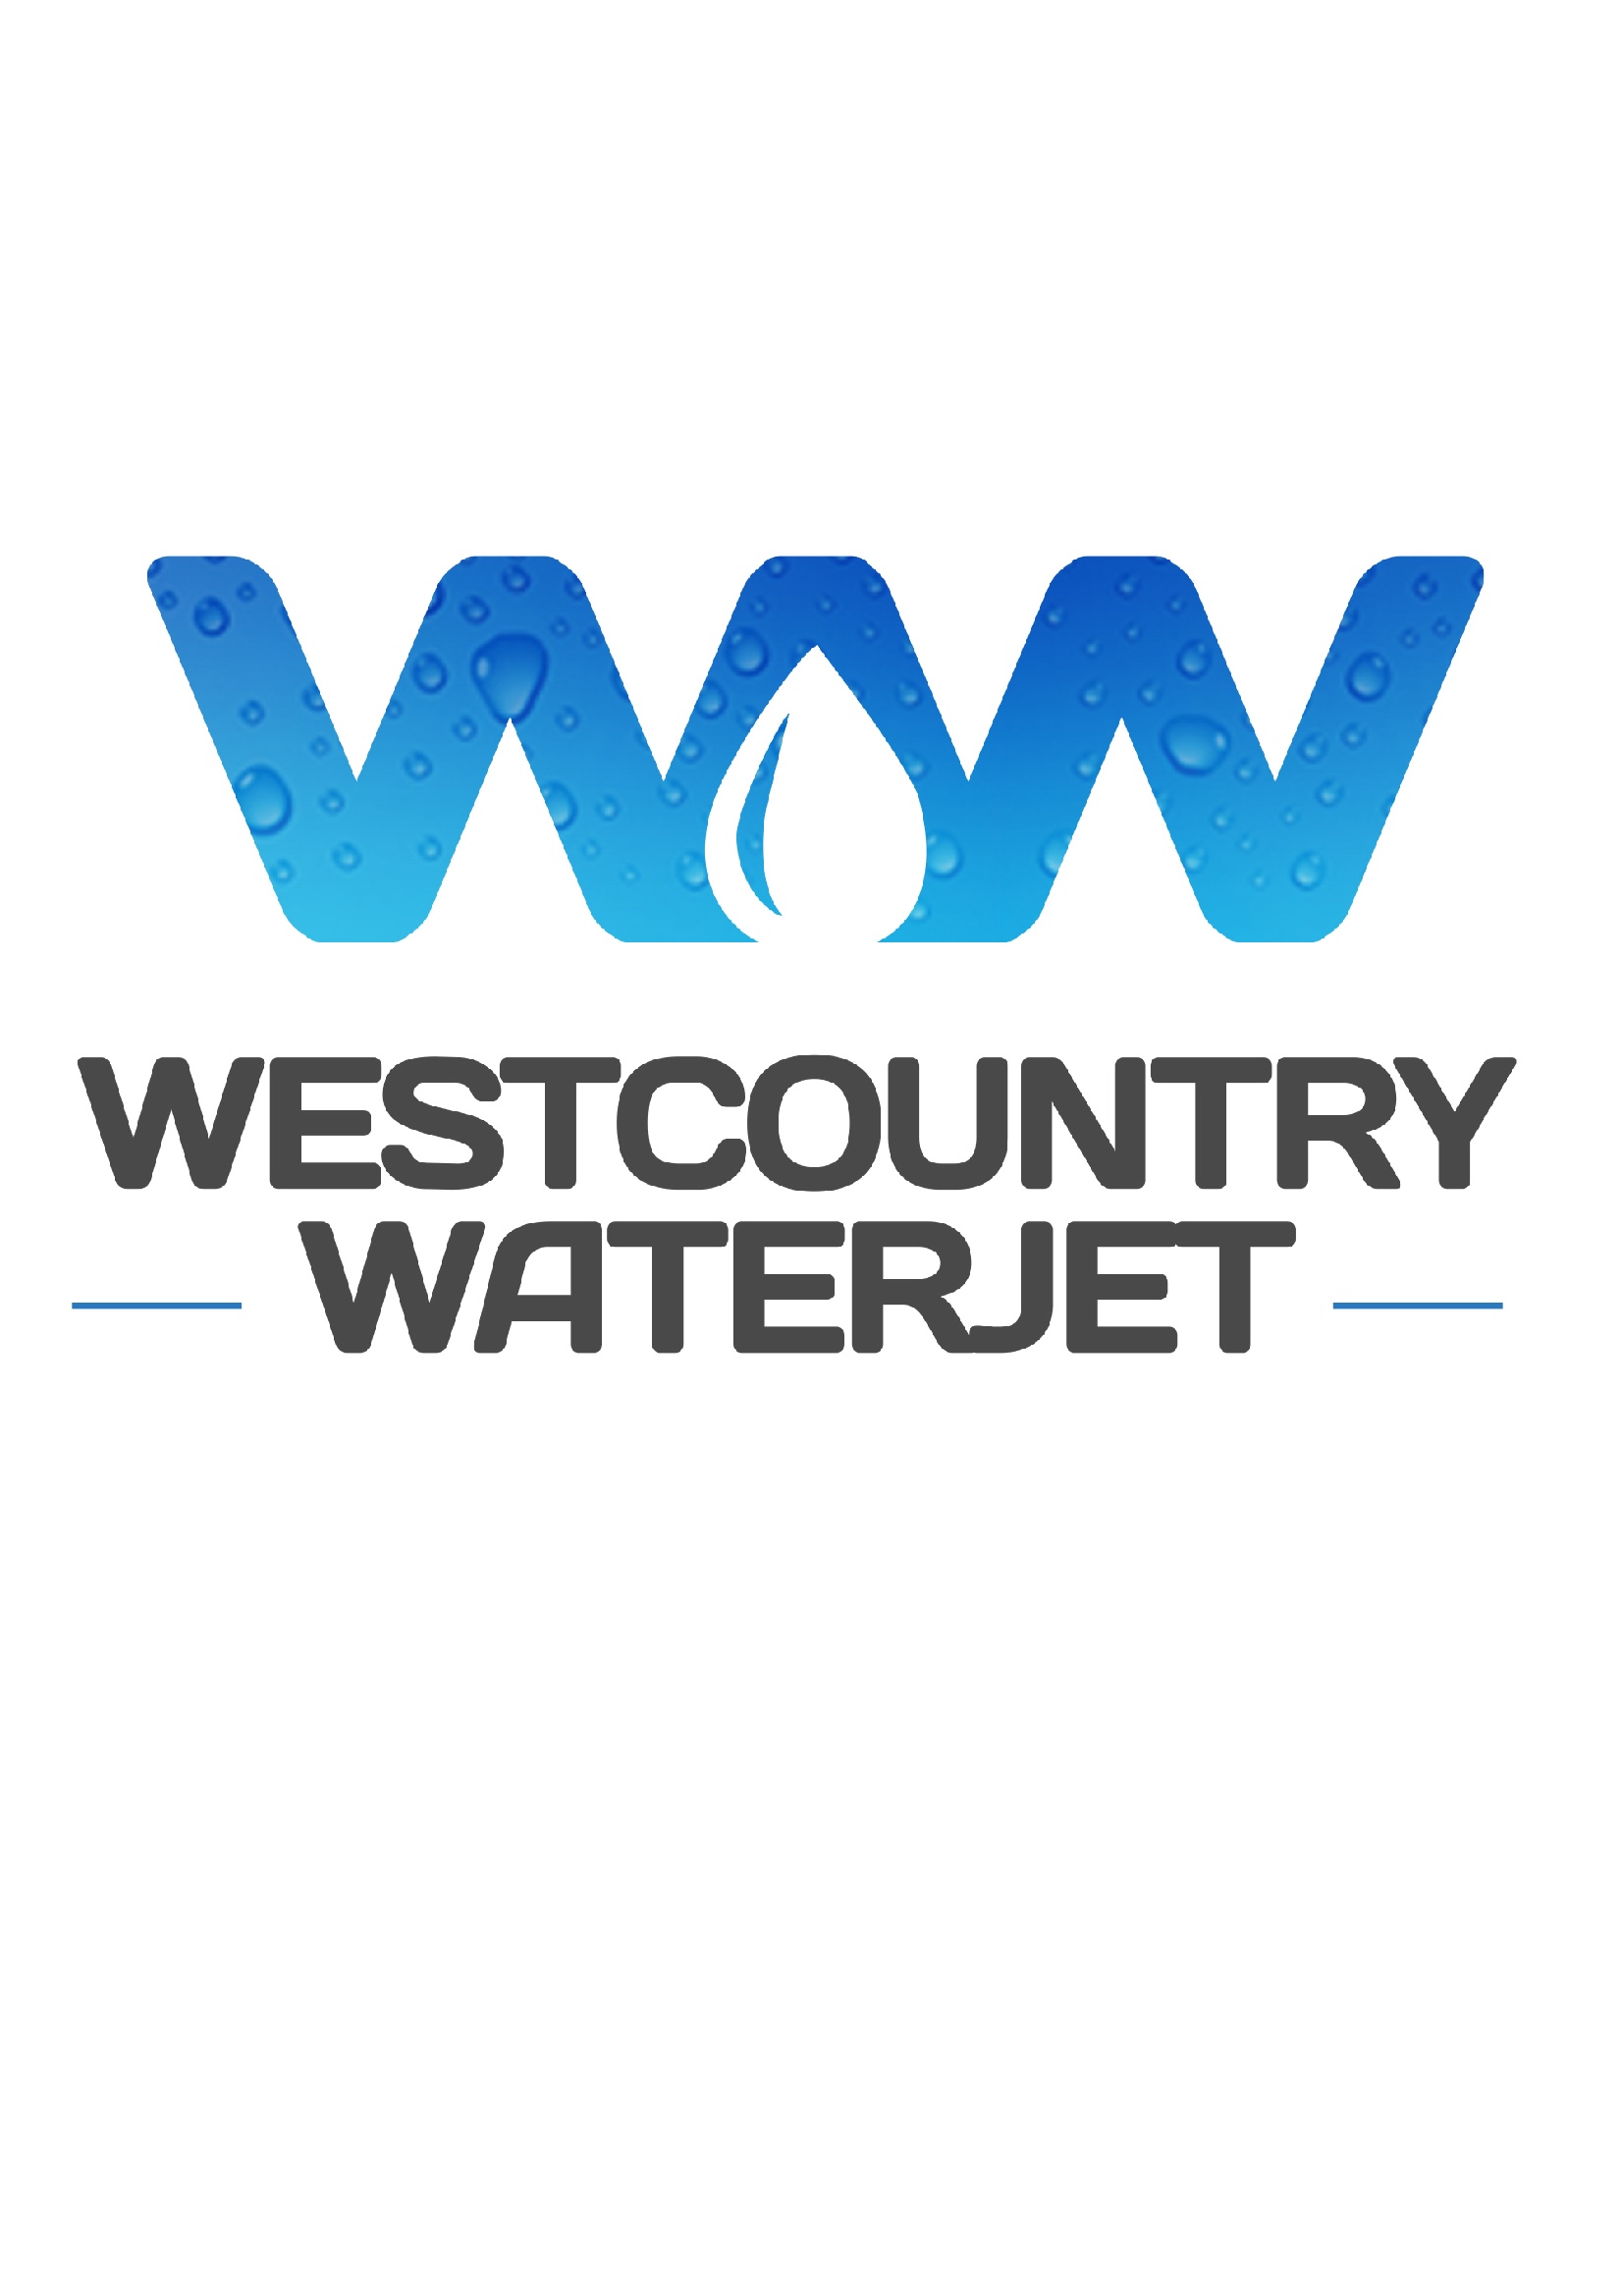 Westcountry Waterjet